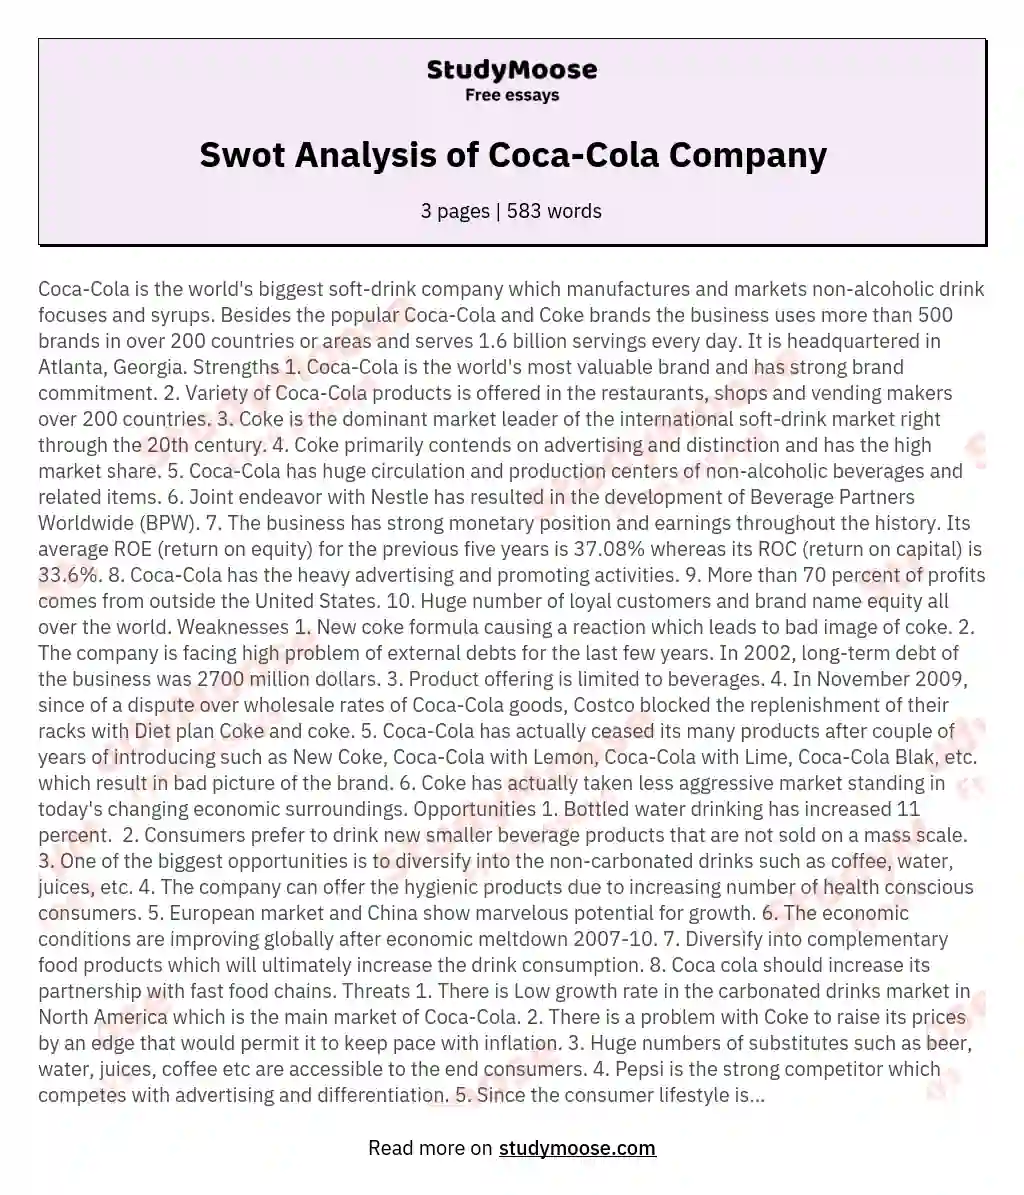 Swot Analysis of Coca-Cola Company